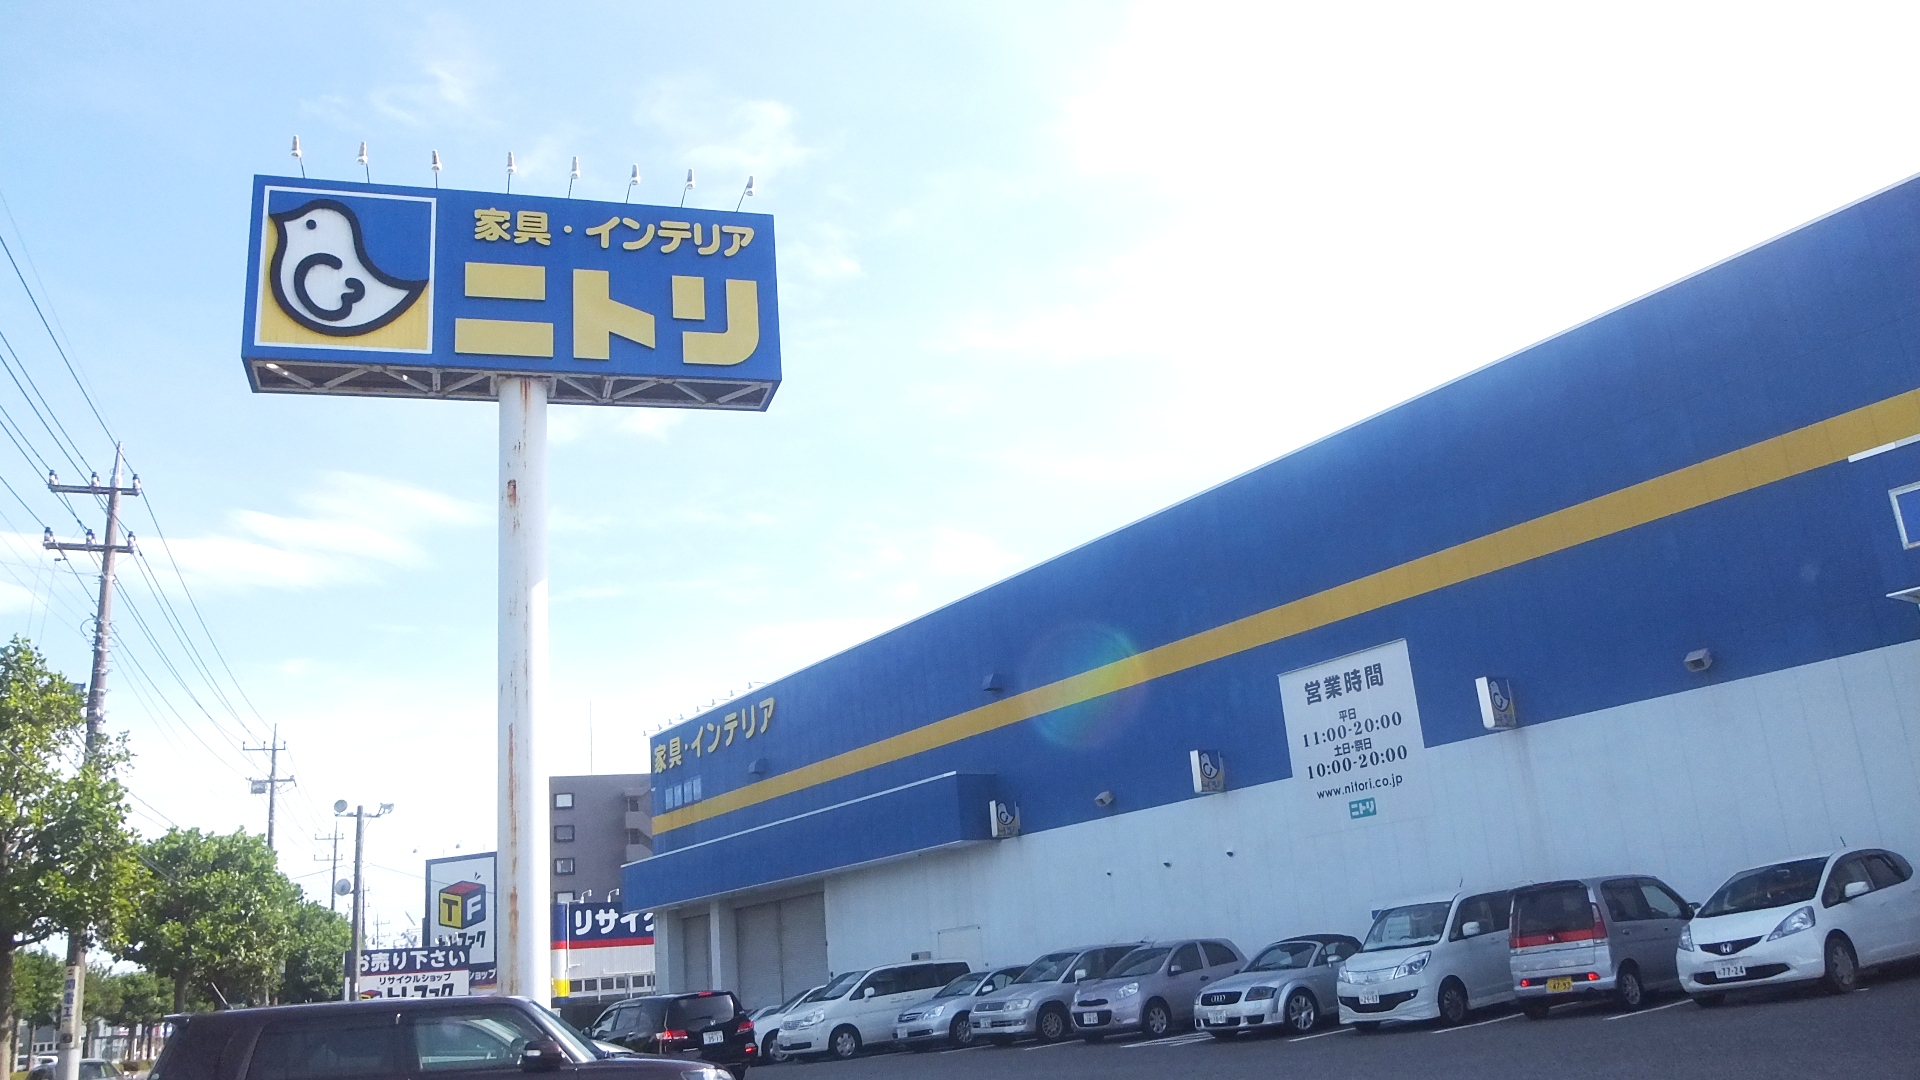 Home center. 835m to Nitori Ushiku store (hardware store)